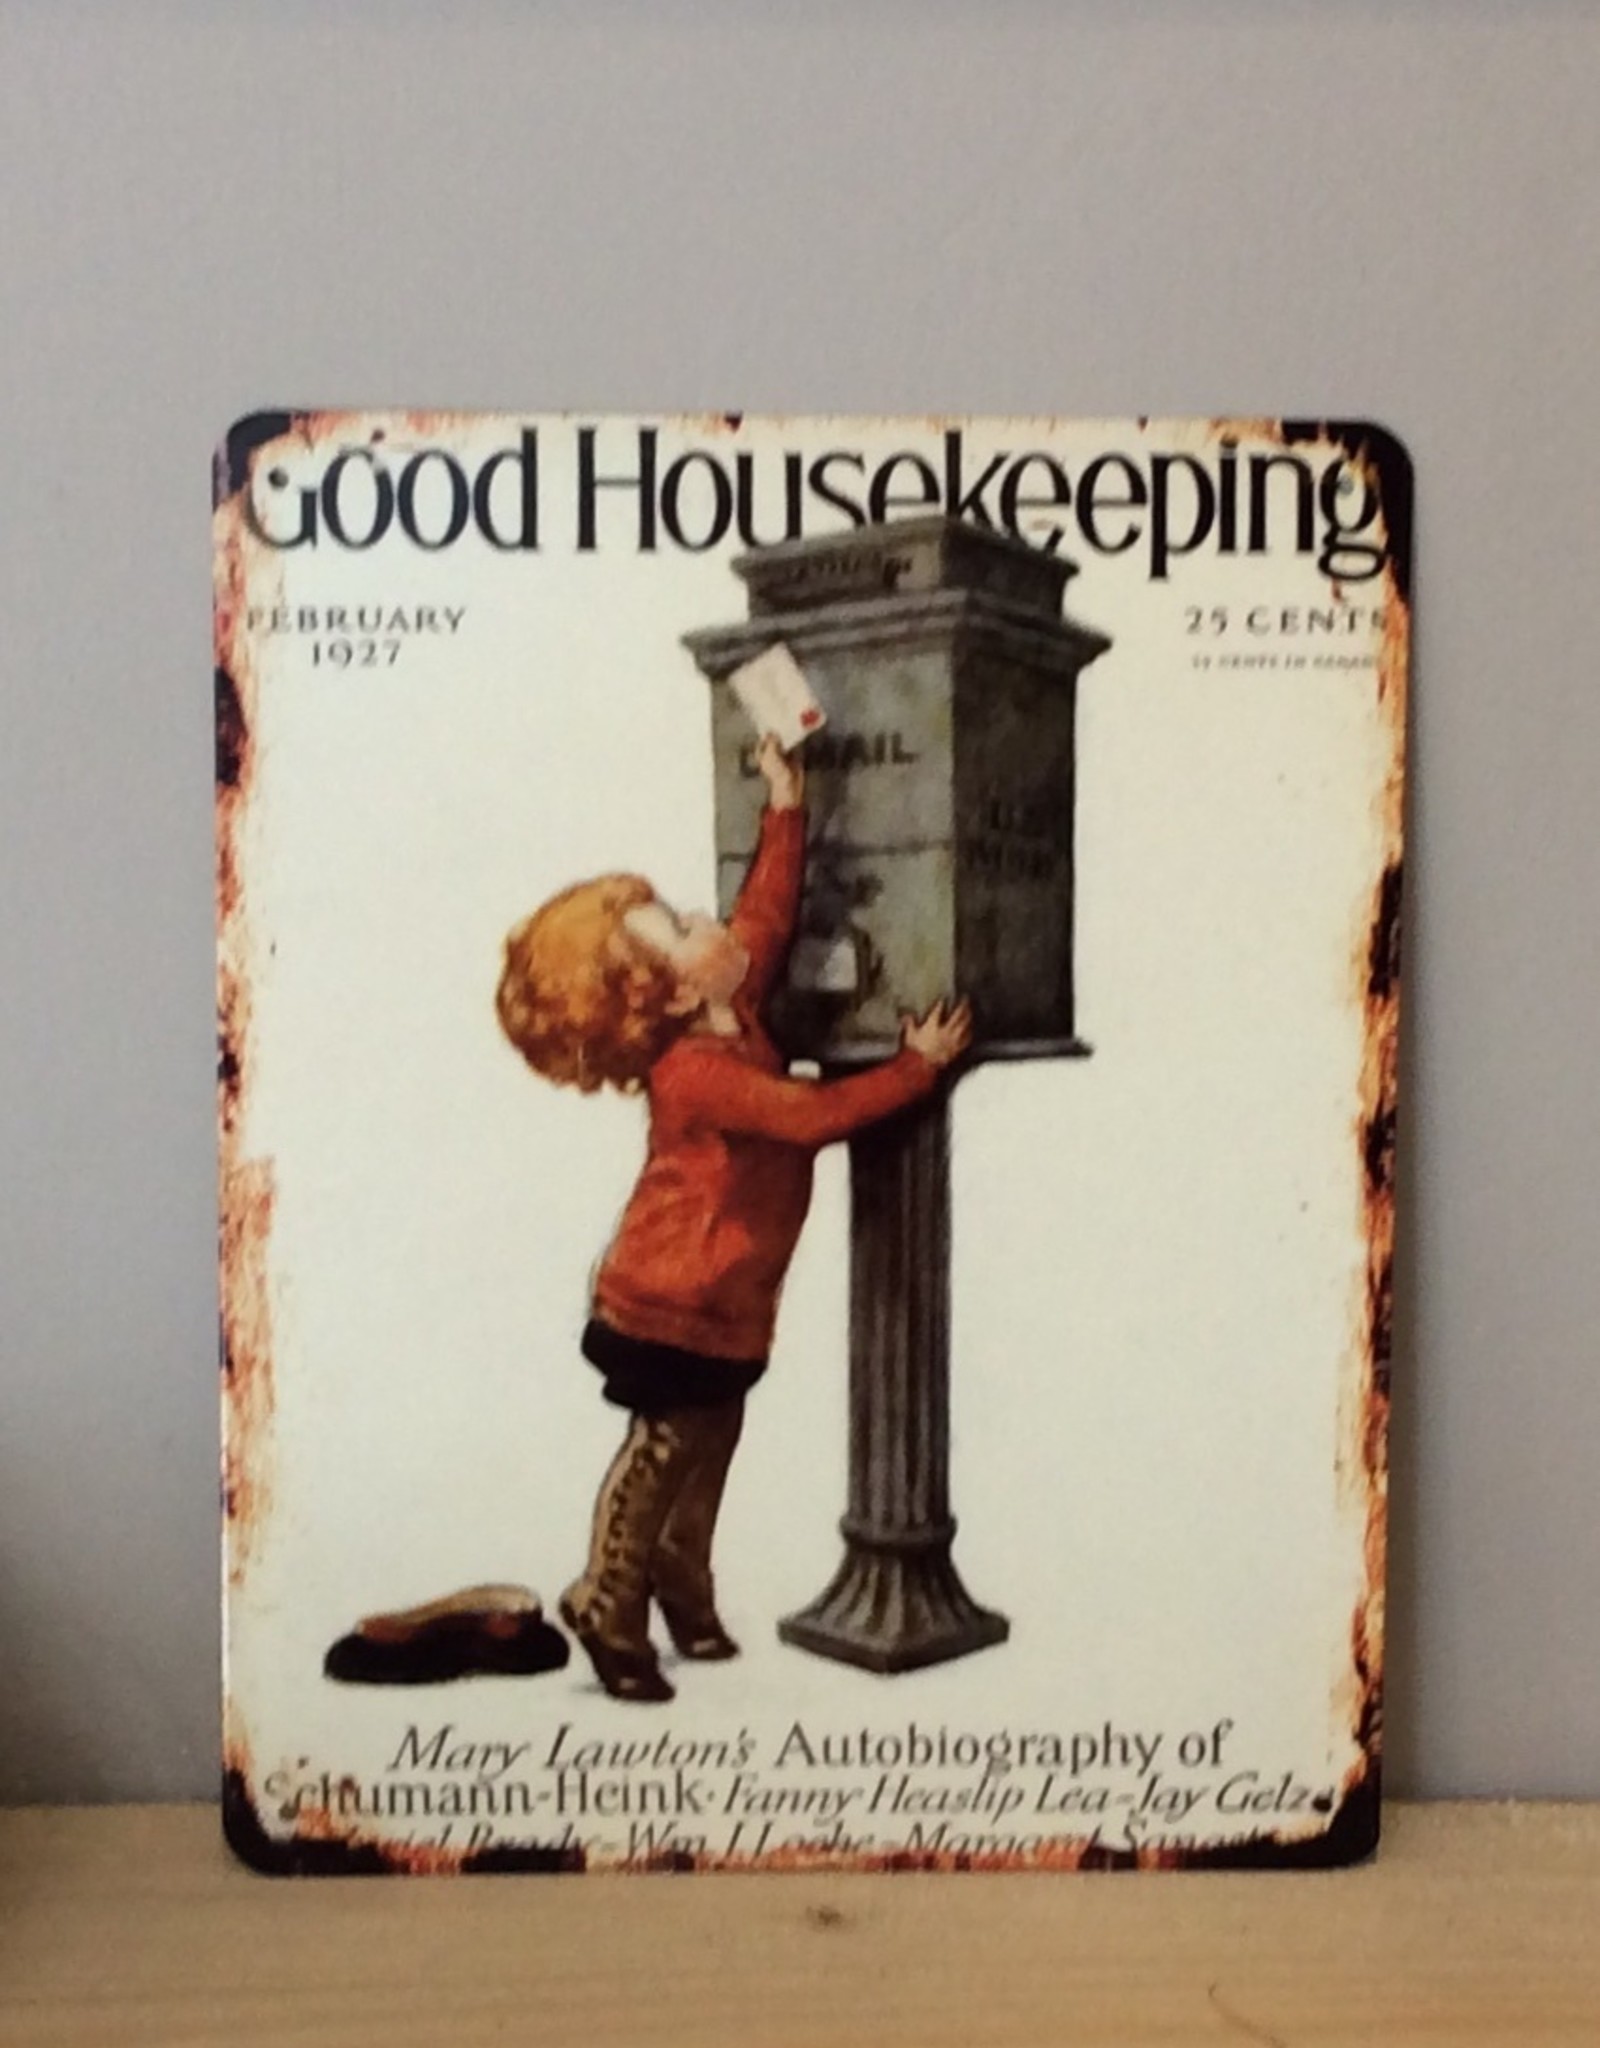 Plaque "Good Housekeeping"